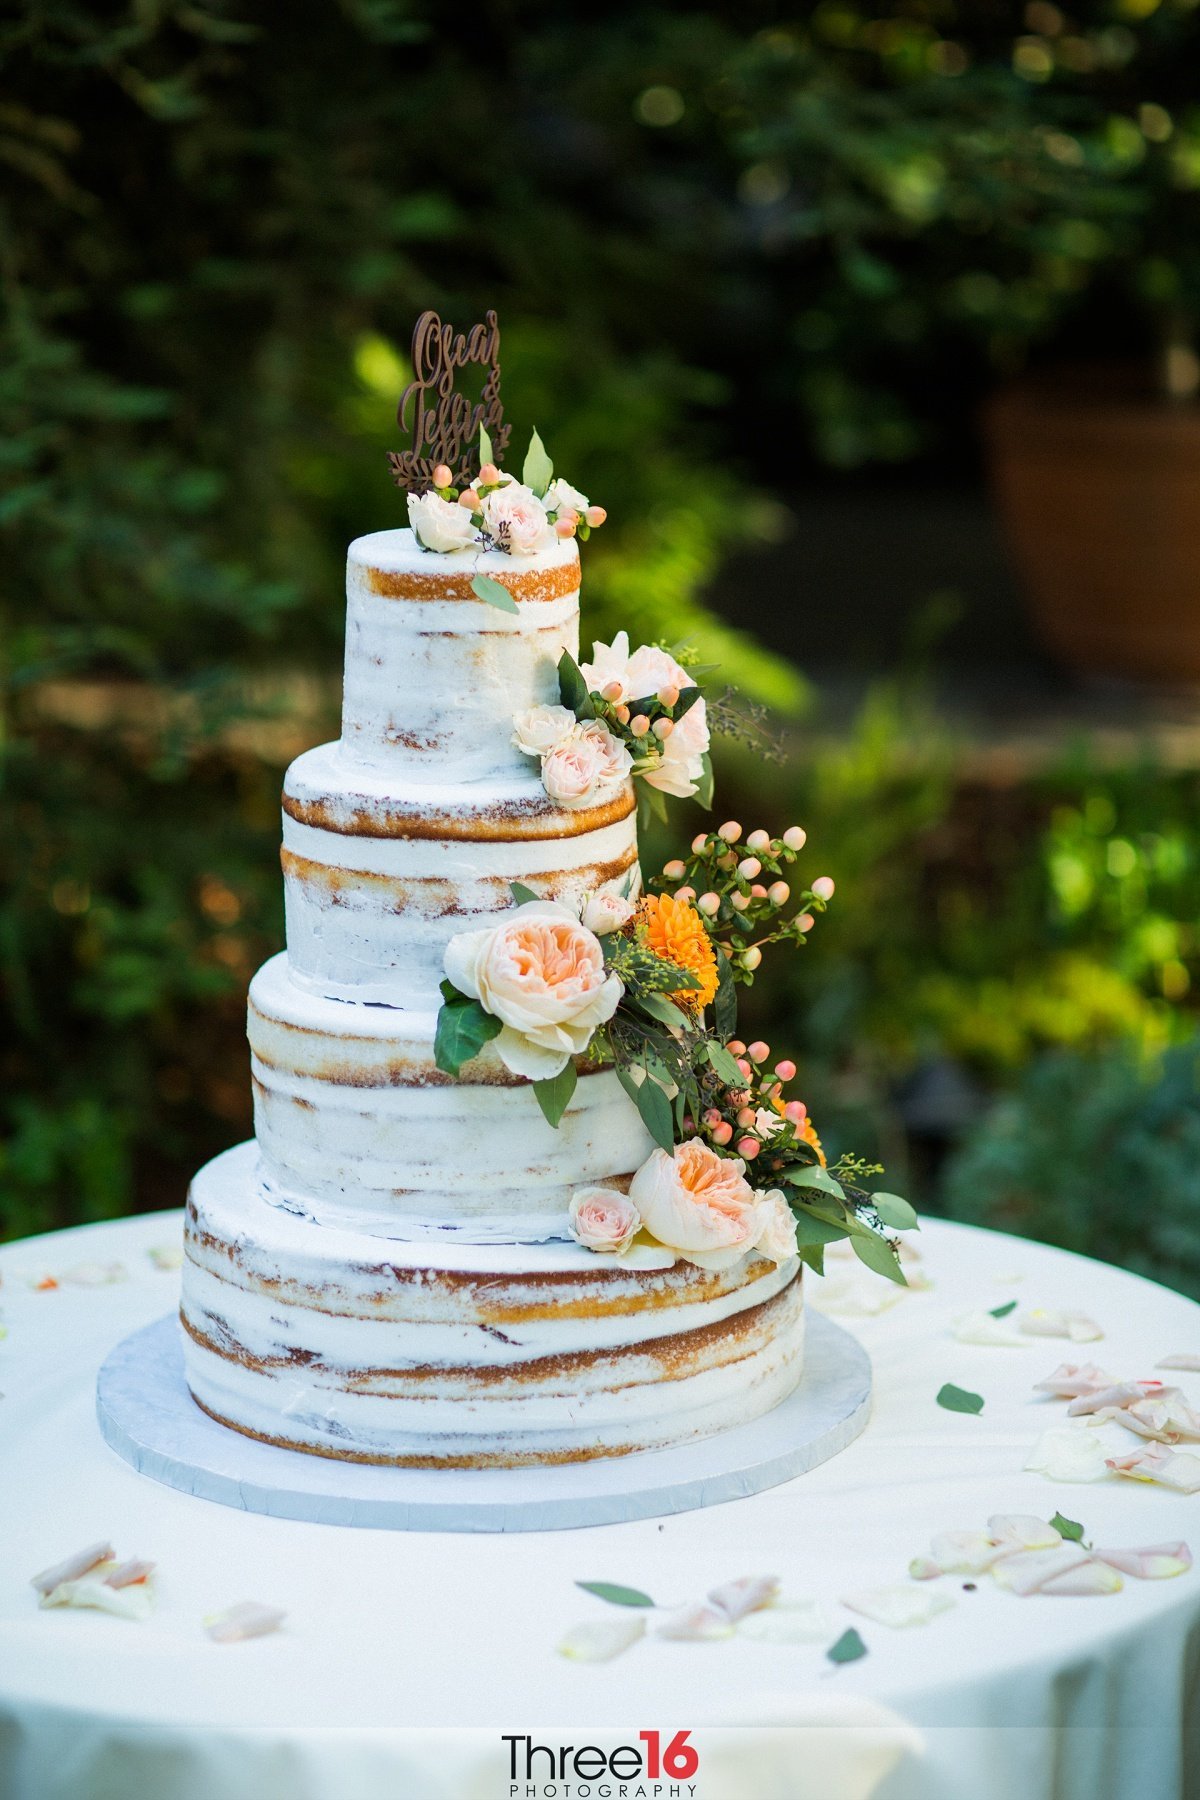 Beautiful 4-tier wedding cake